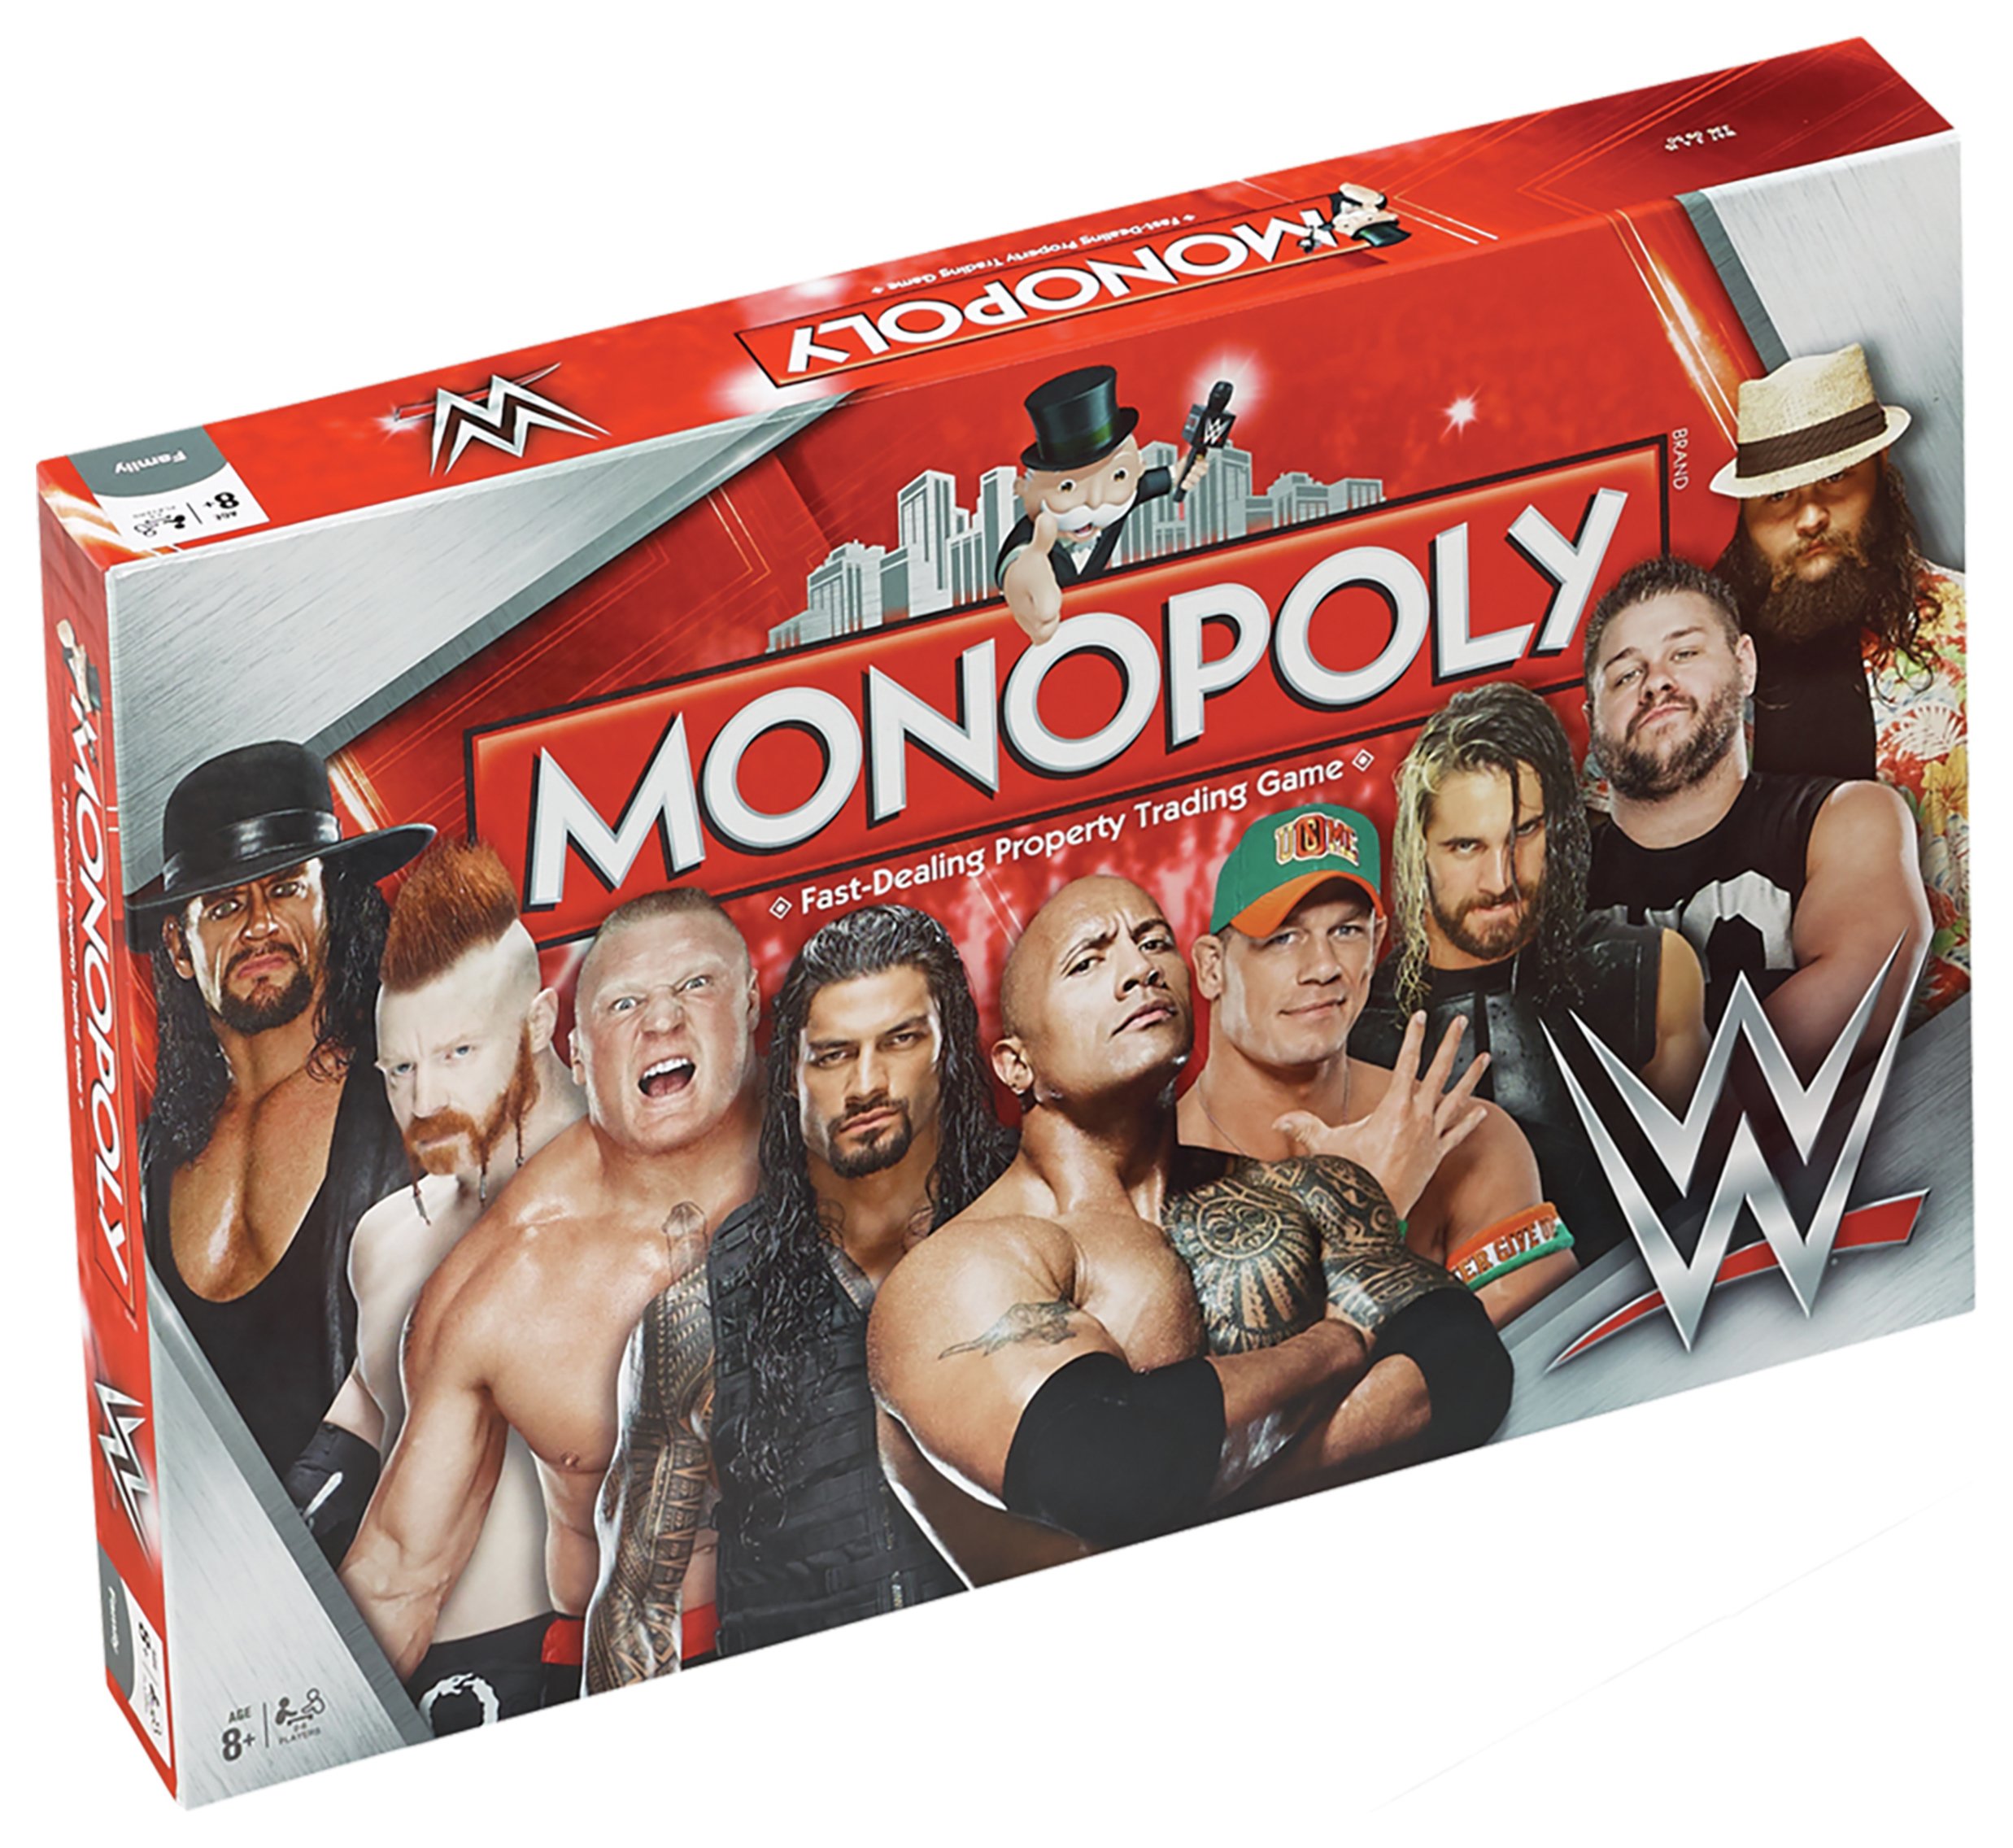 WWE Monopoly